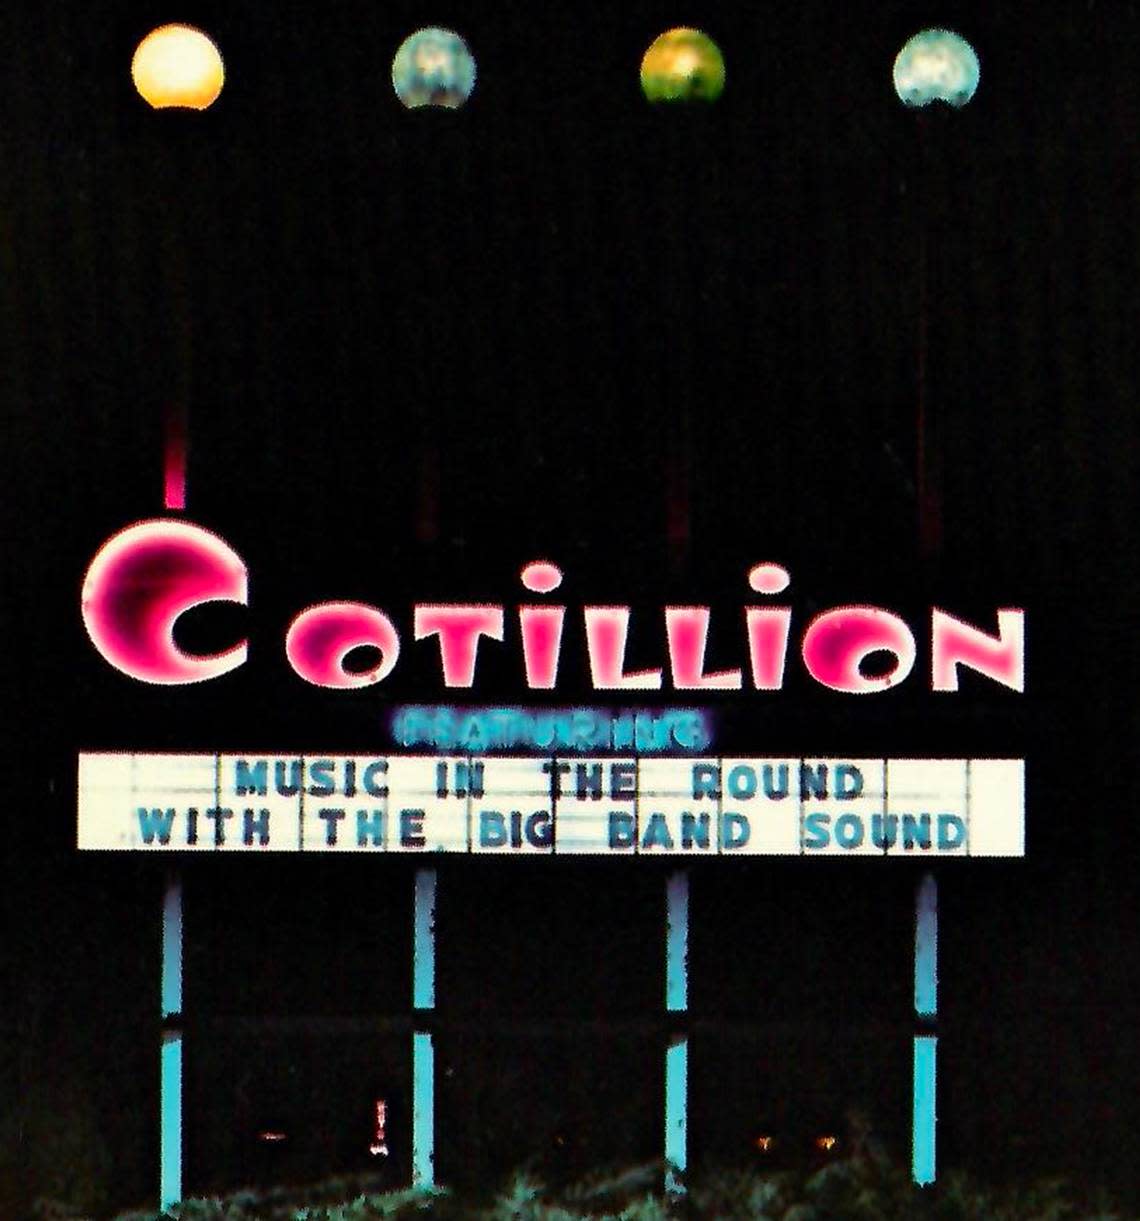 The Cotillion sign.